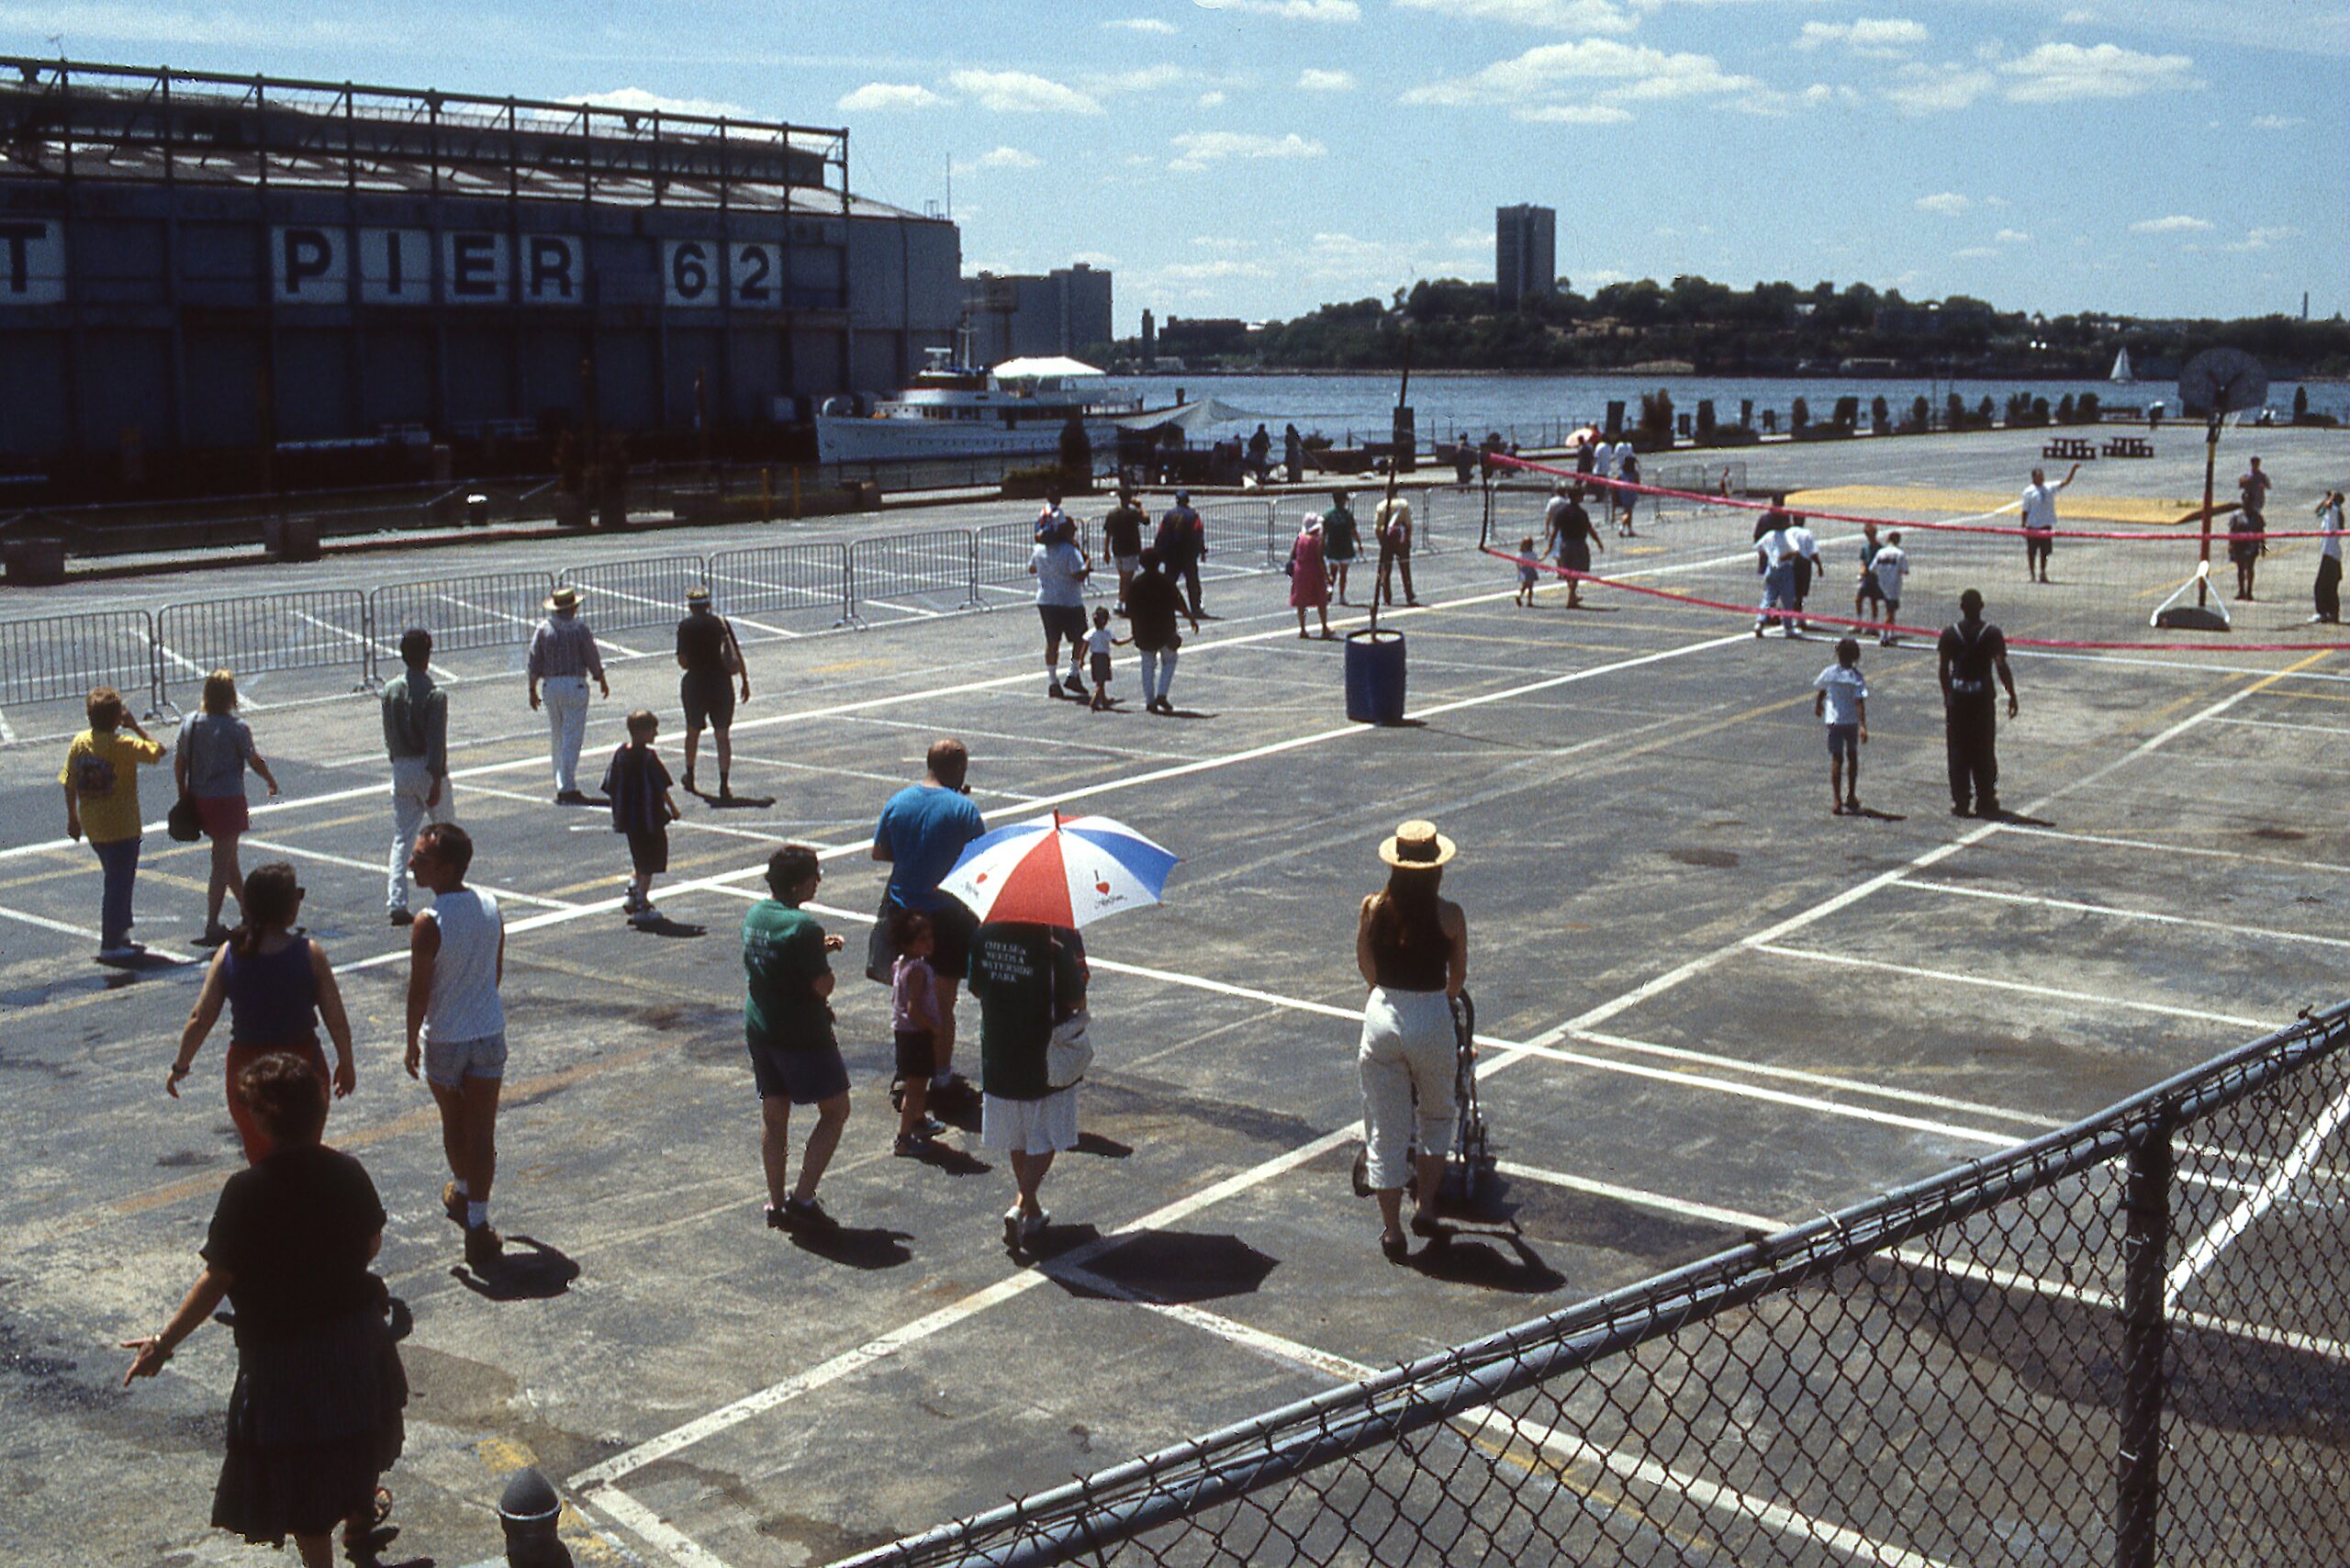 Park visitors walk over an asphalt area on Pier 63 prior to its renovation